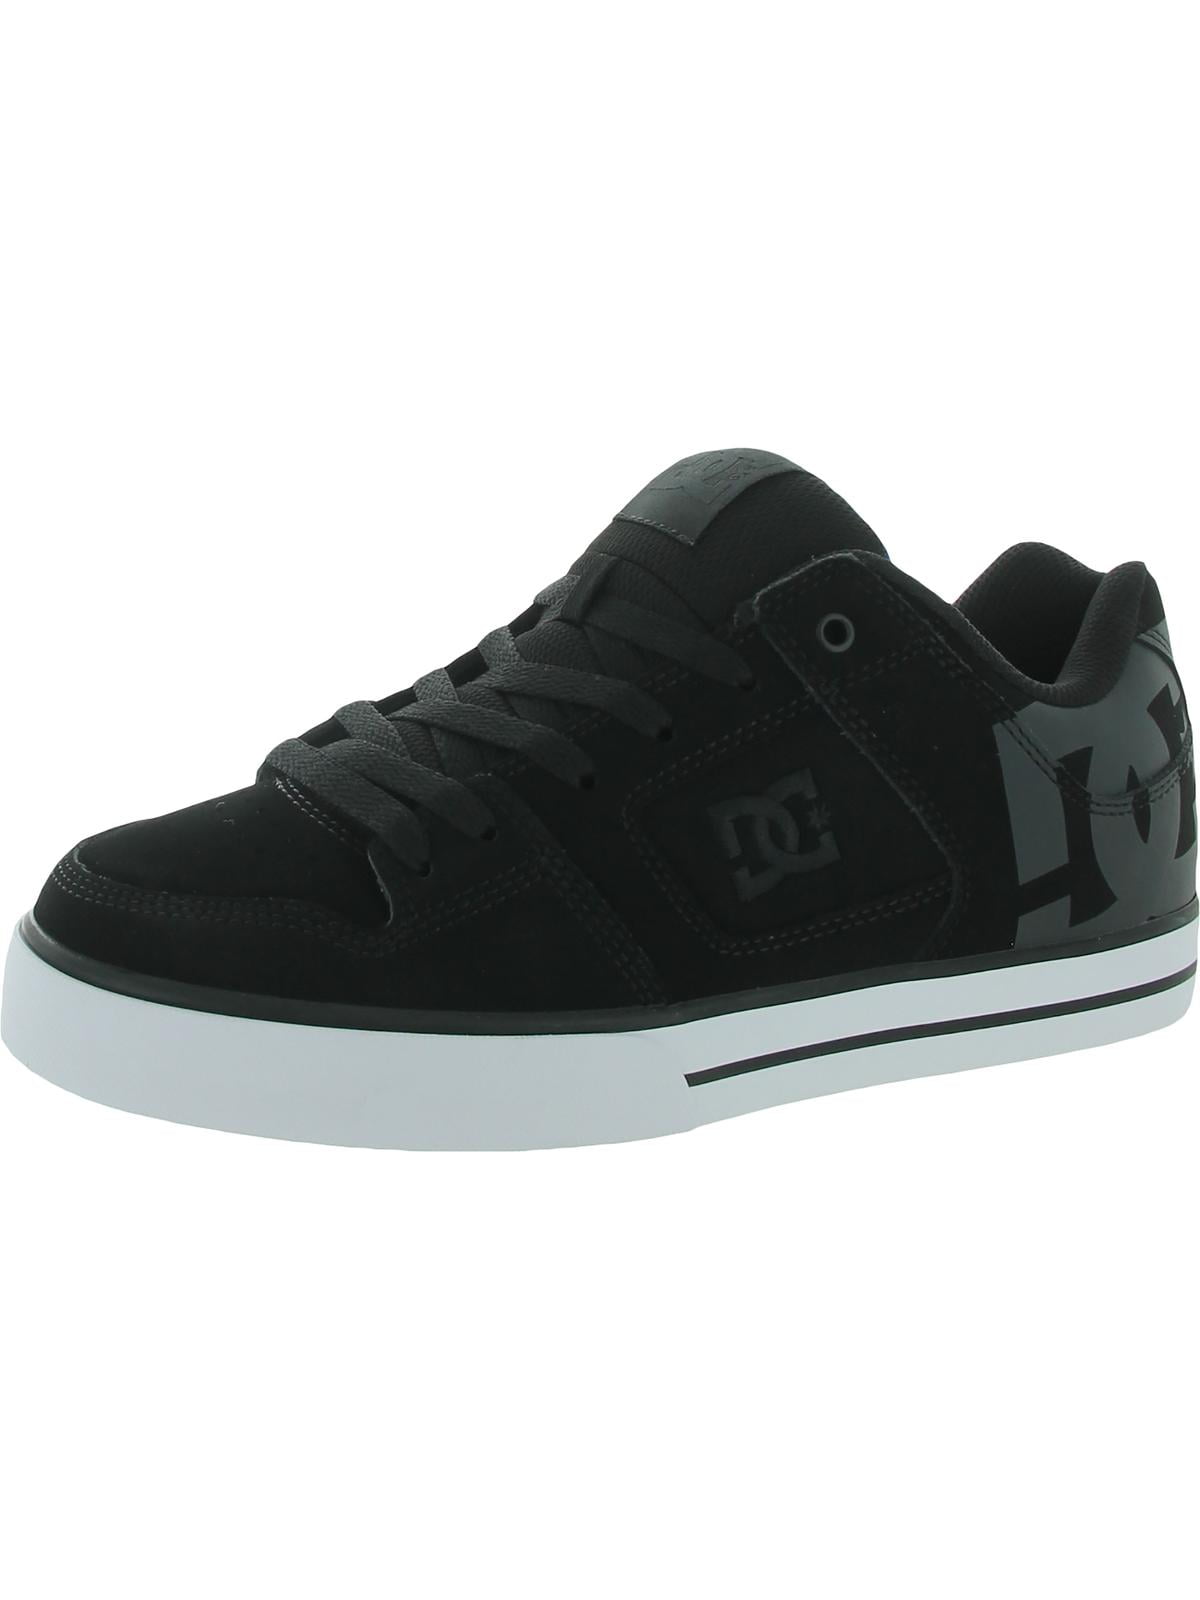 Shoes Pure Men's Leather Skateboarding Sneakers Black Monogram Size 7.5 - Walmart.com